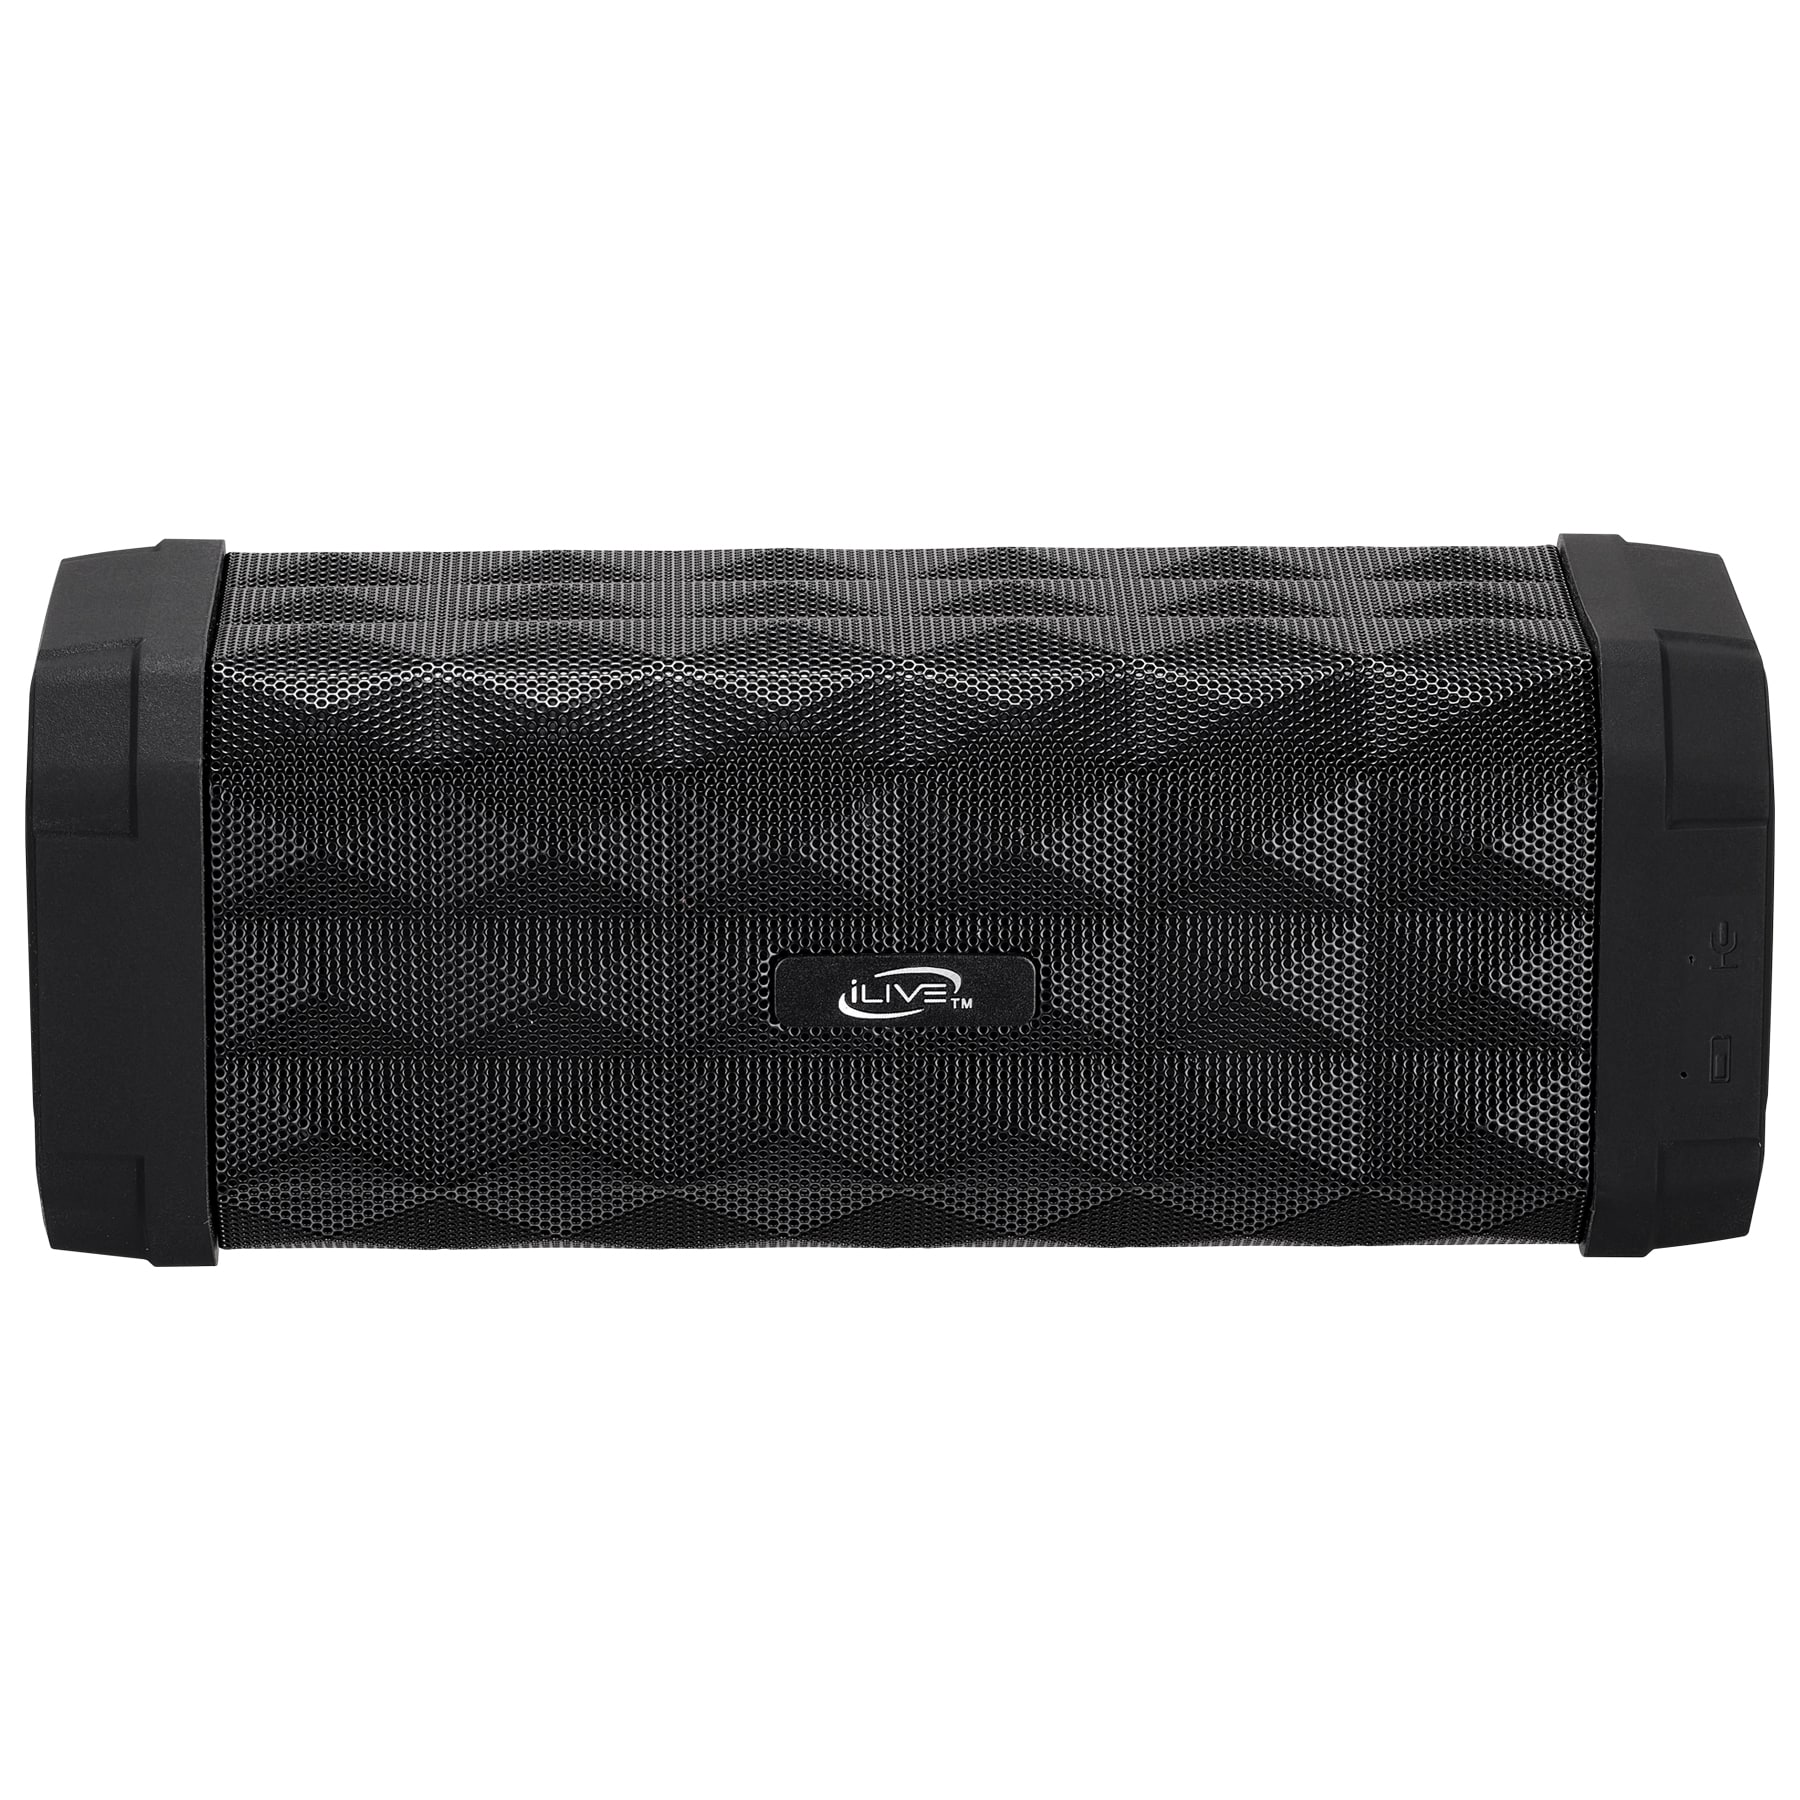 JBL's Clip 3 portable Bluetooth speaker packs a built-in carabiner at $40  (Save 20%)